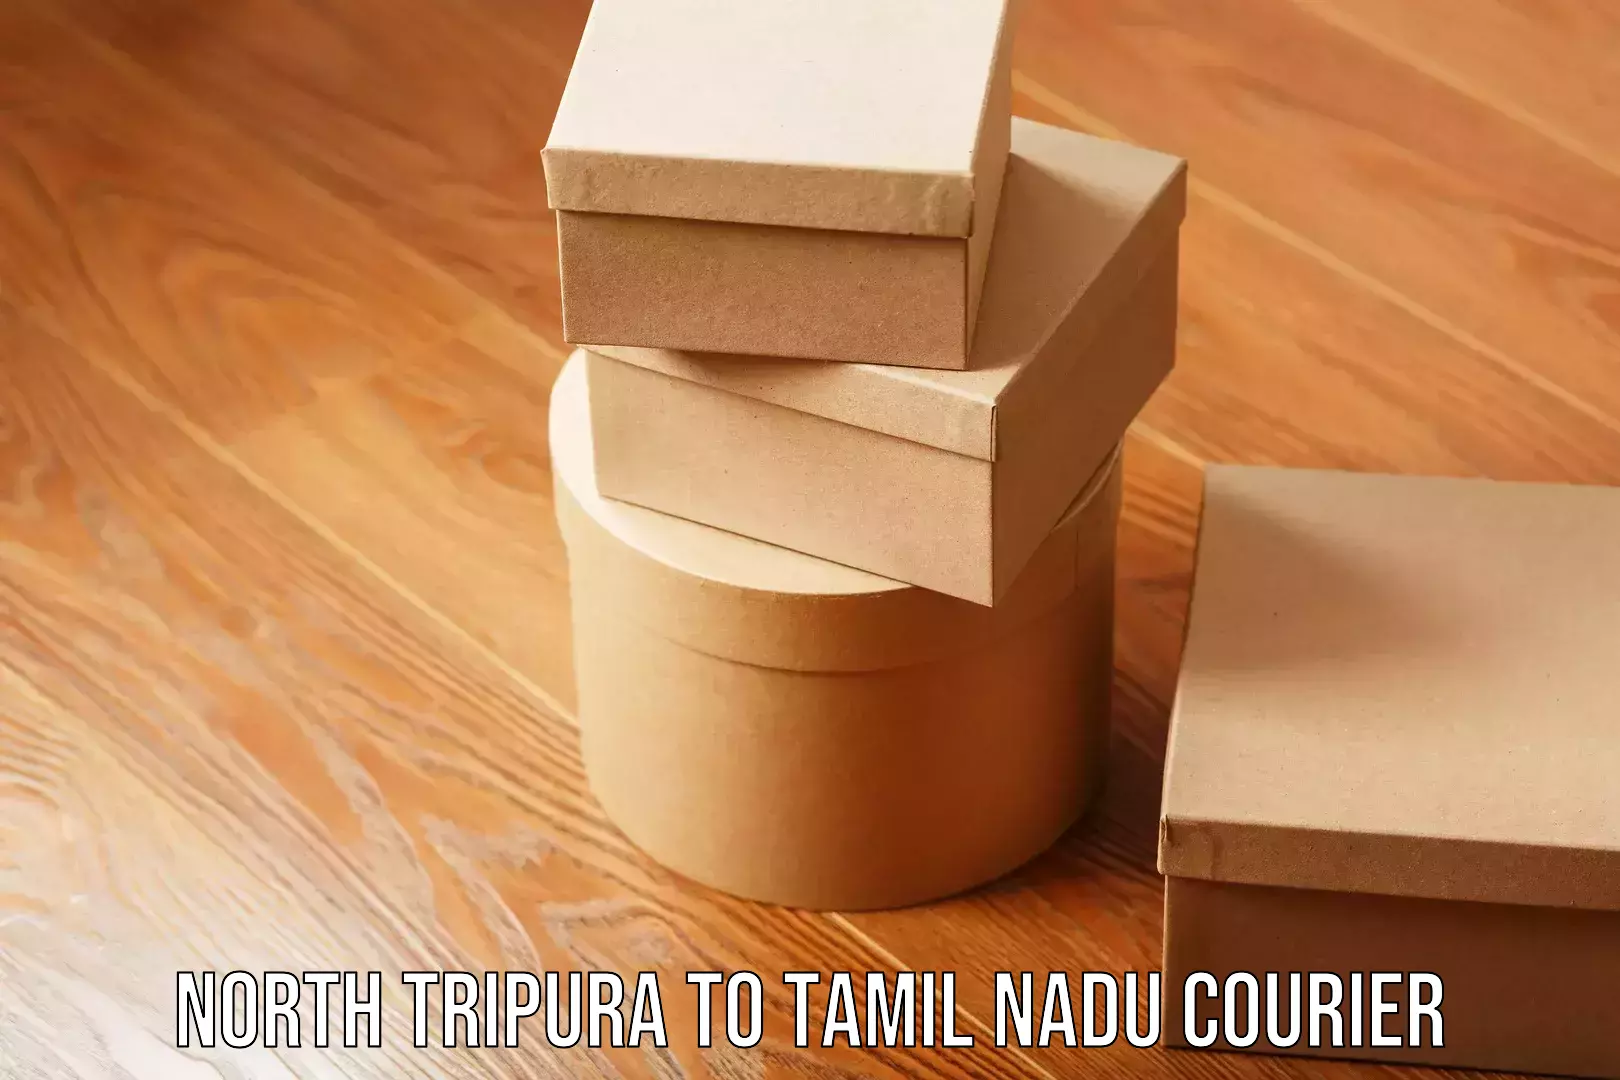 User-friendly delivery service North Tripura to Tamil Nadu